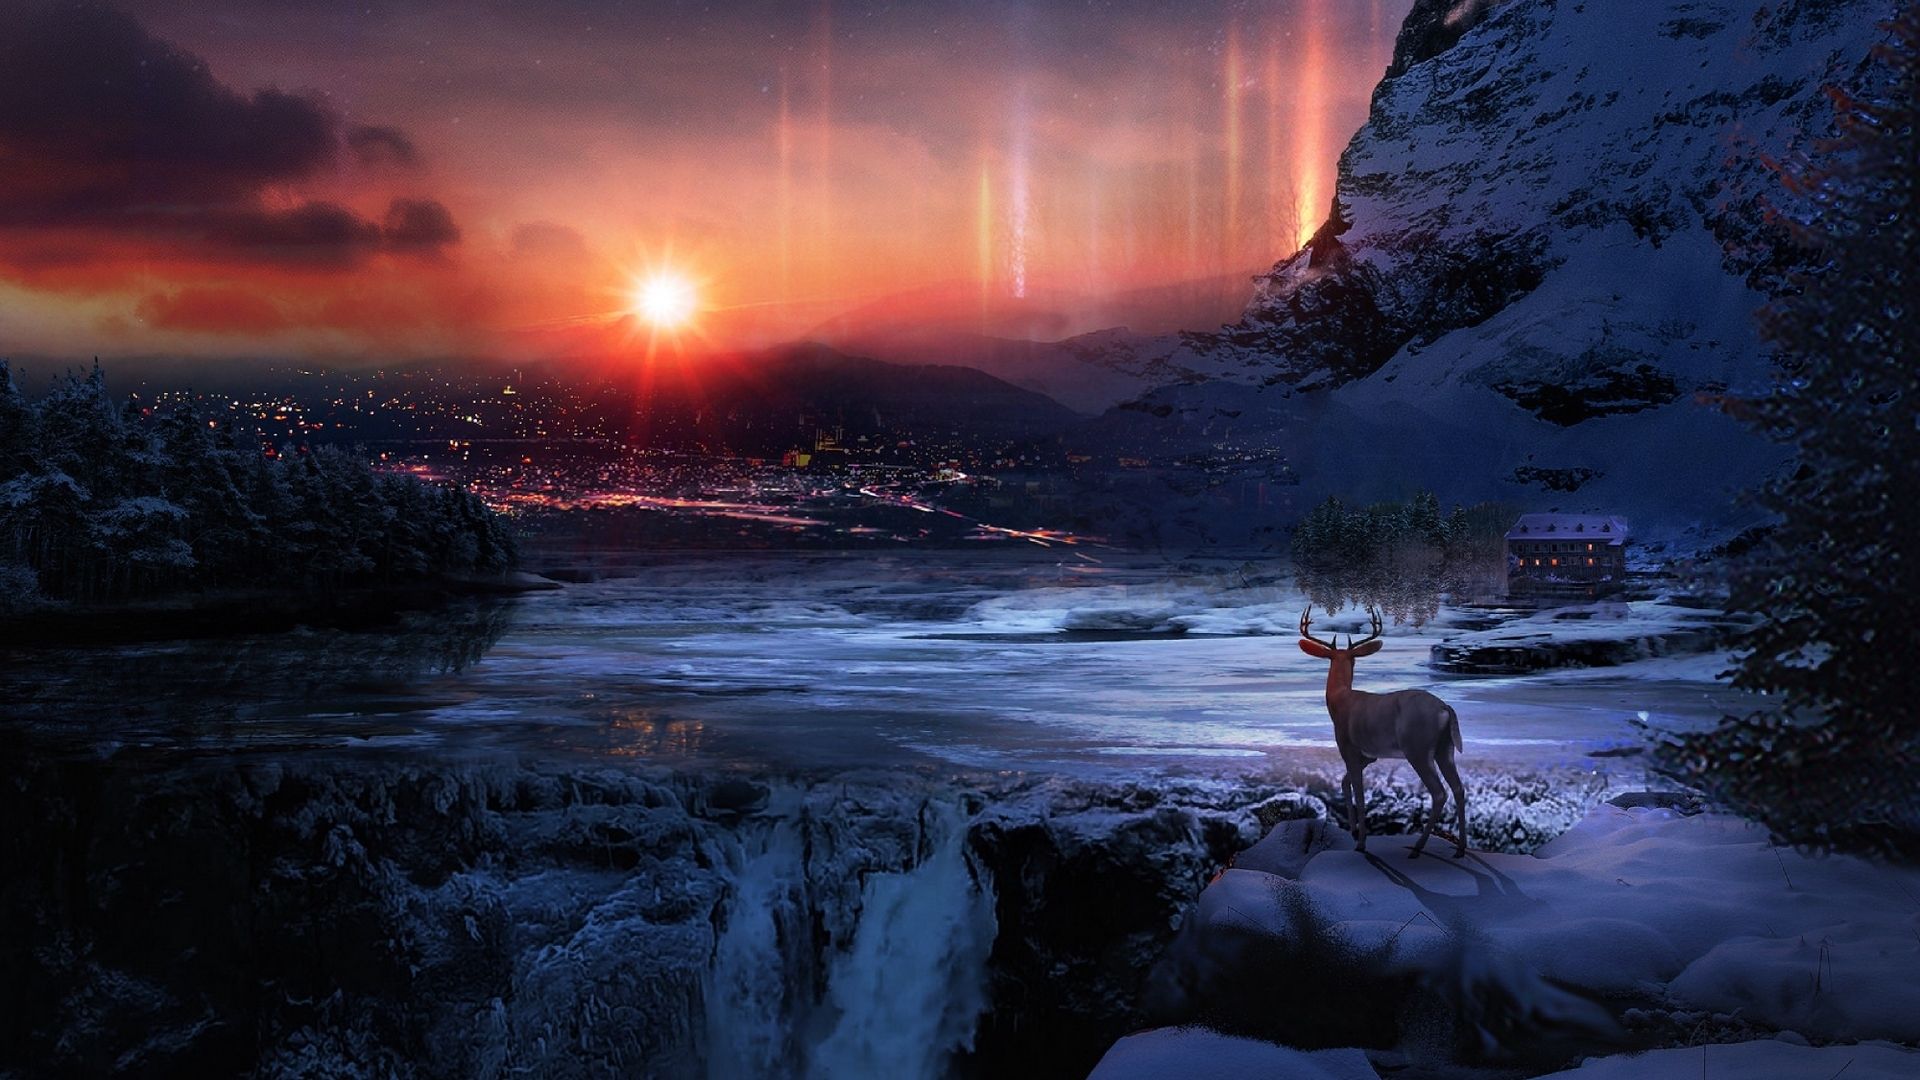 A deer standing on a snowy cliff watching the sunset - Deer